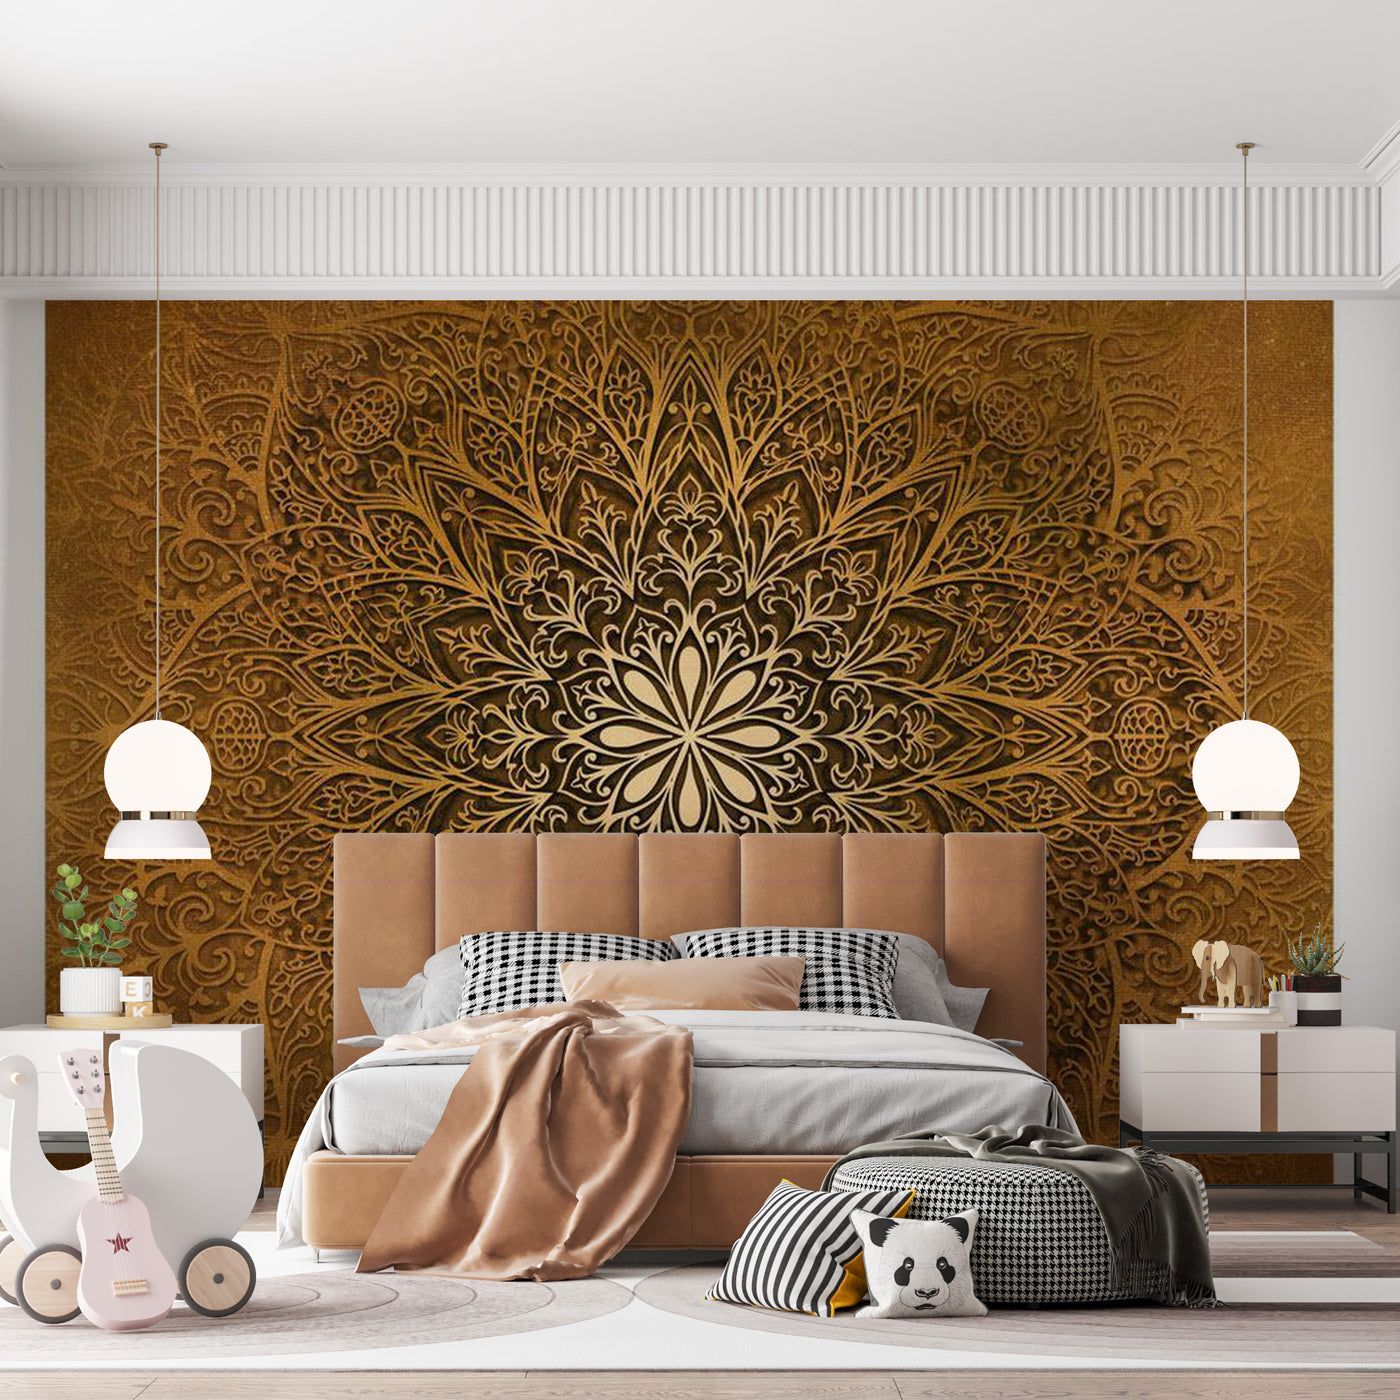 Peel & Stick Mandala Wall Mural - Golden Orange Mandala - Removable Wall Decals